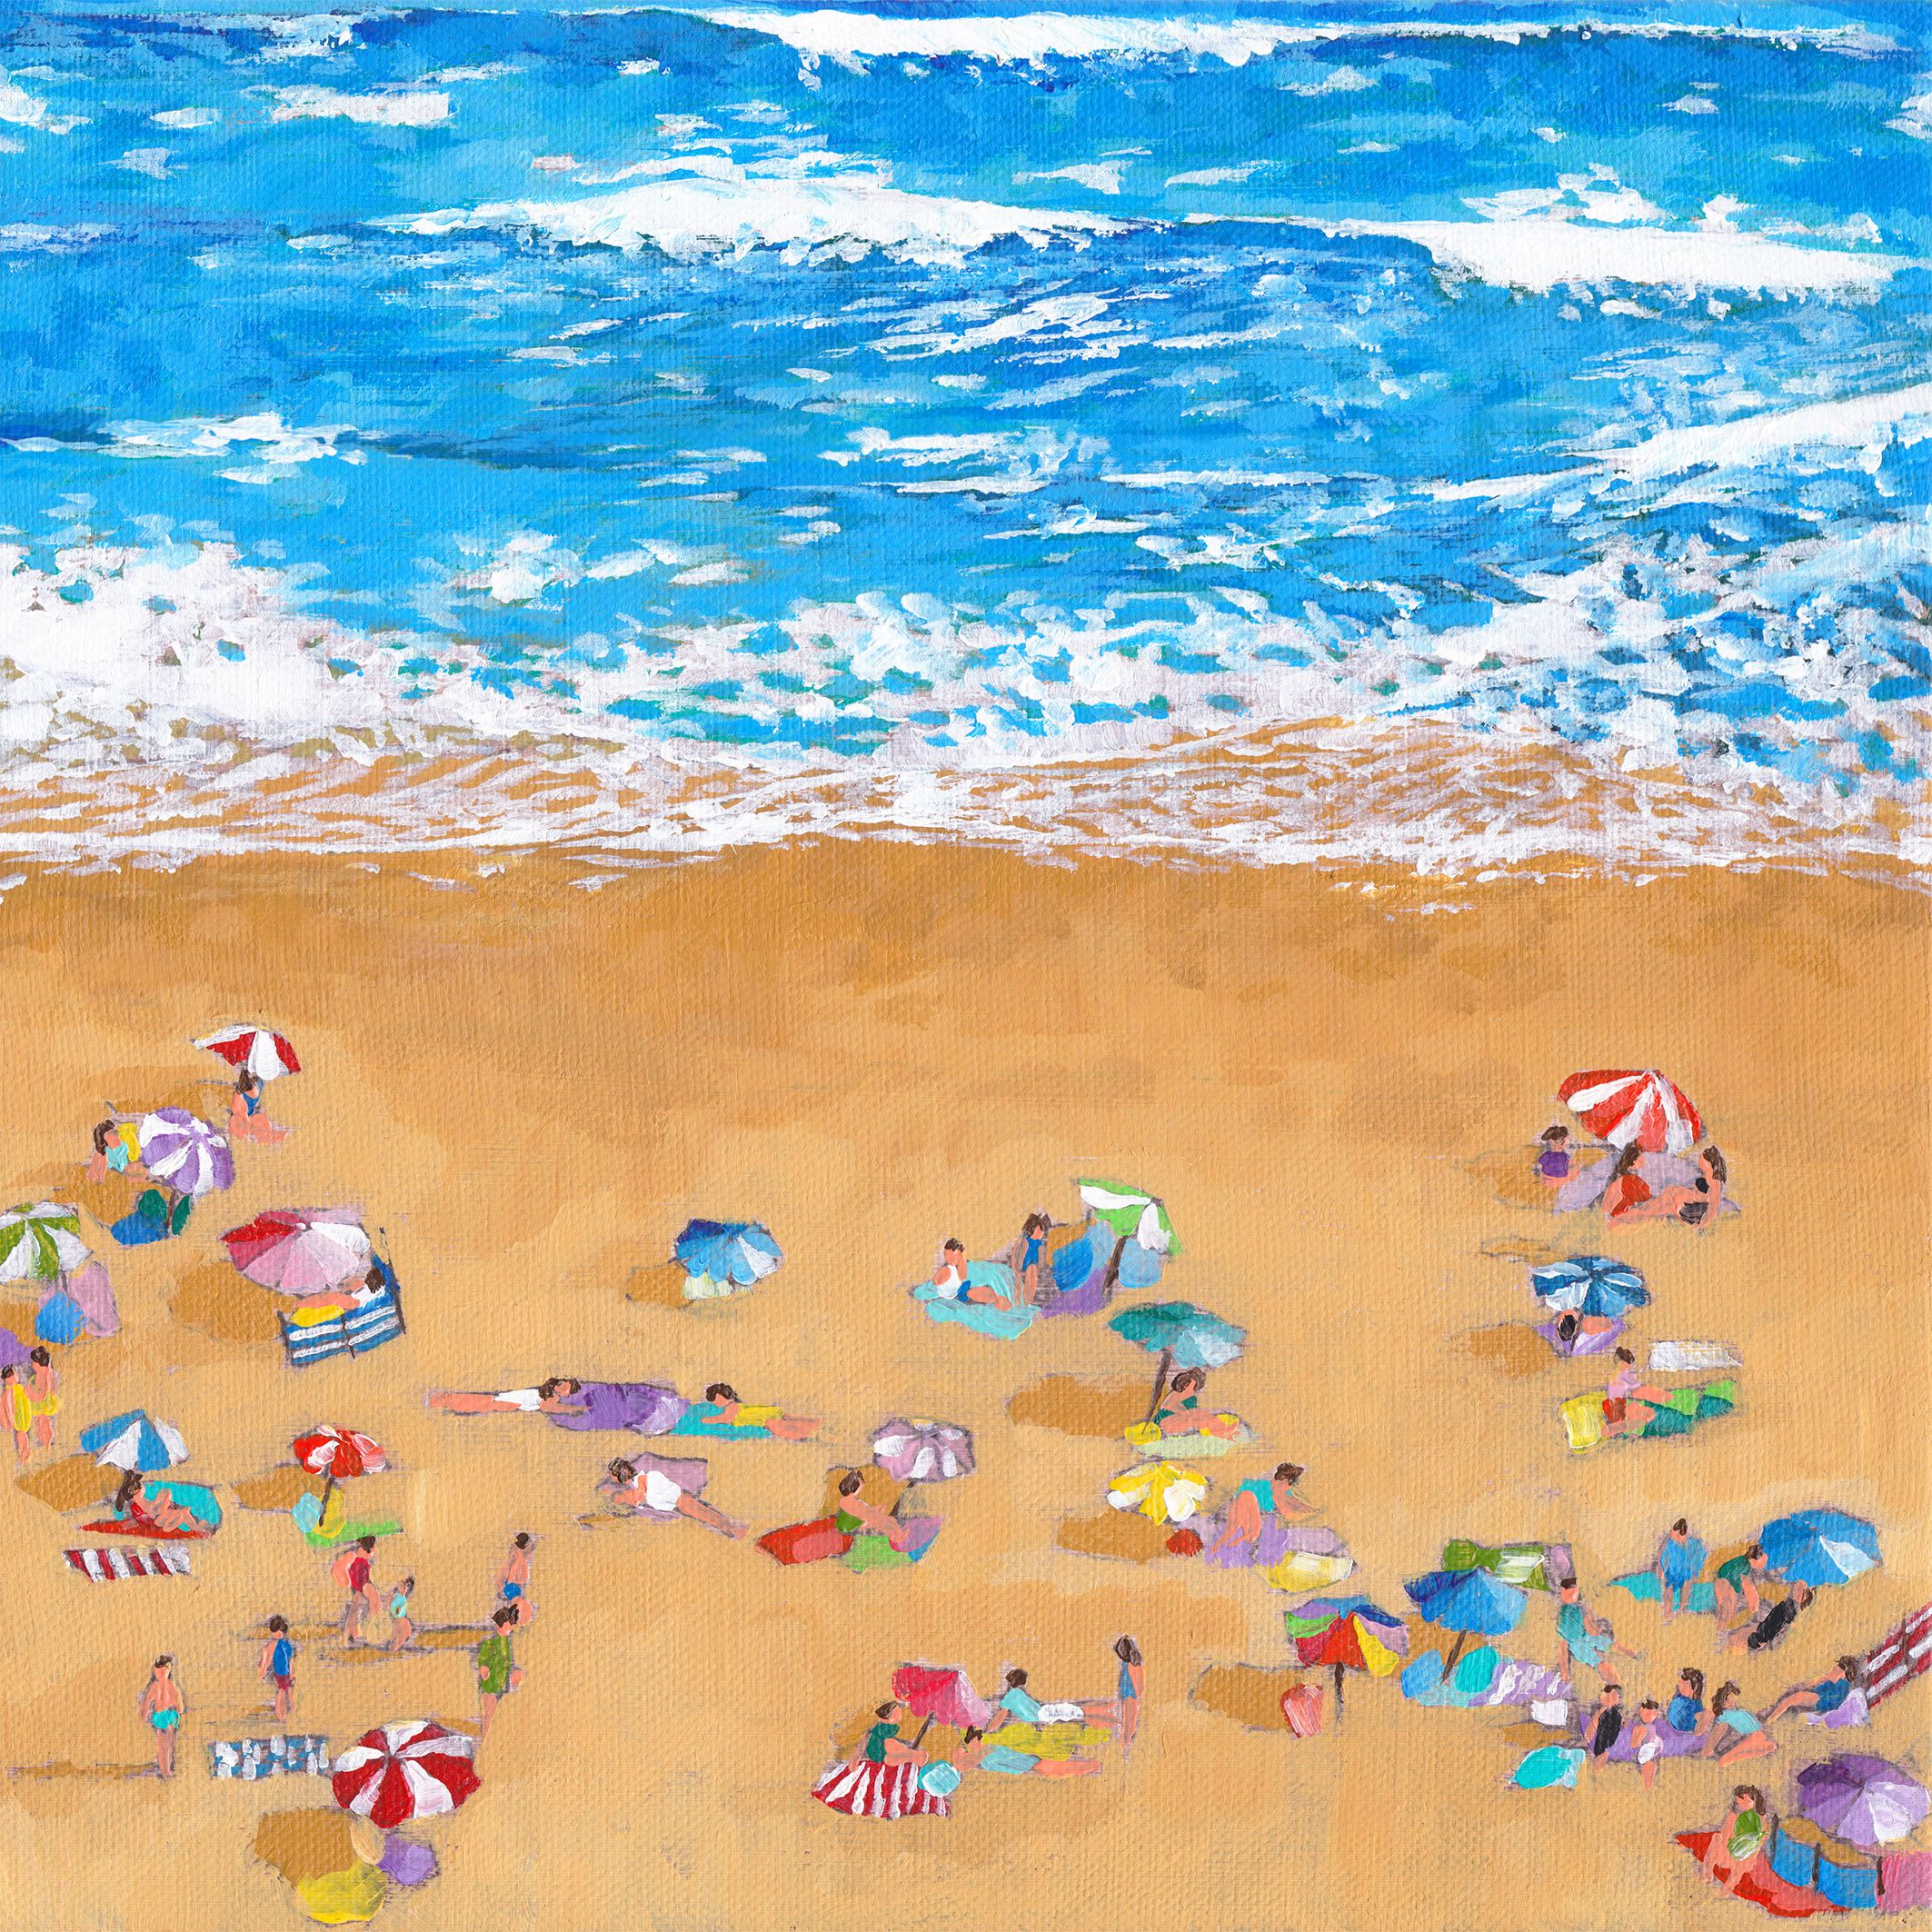 Blue Waves, Bright Umbrellas by Lenny Cornforth